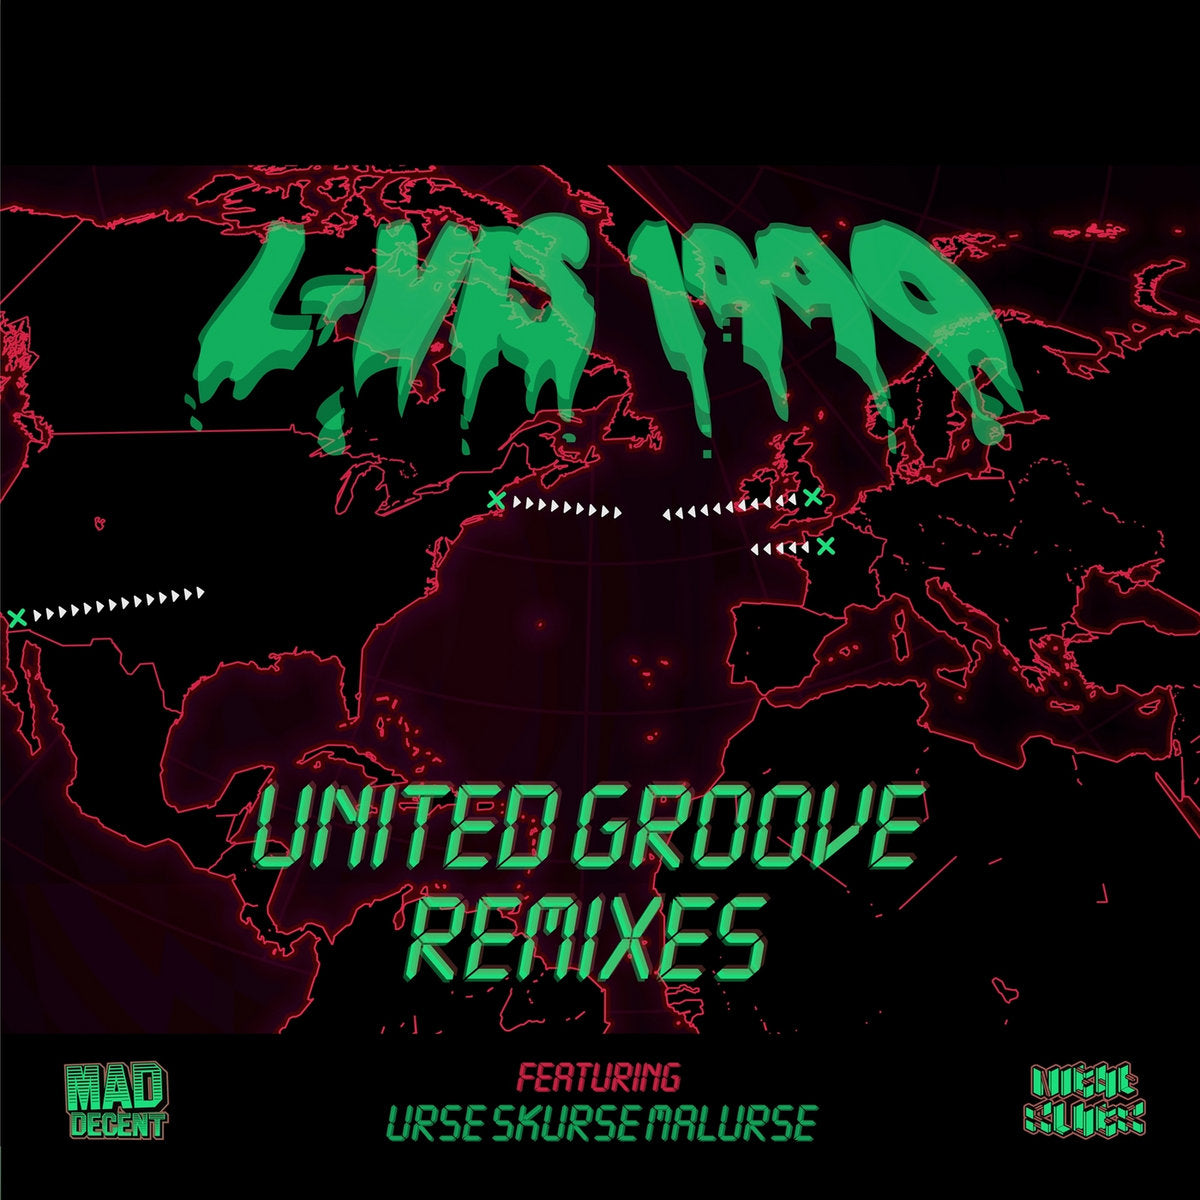 United Groove Remixes